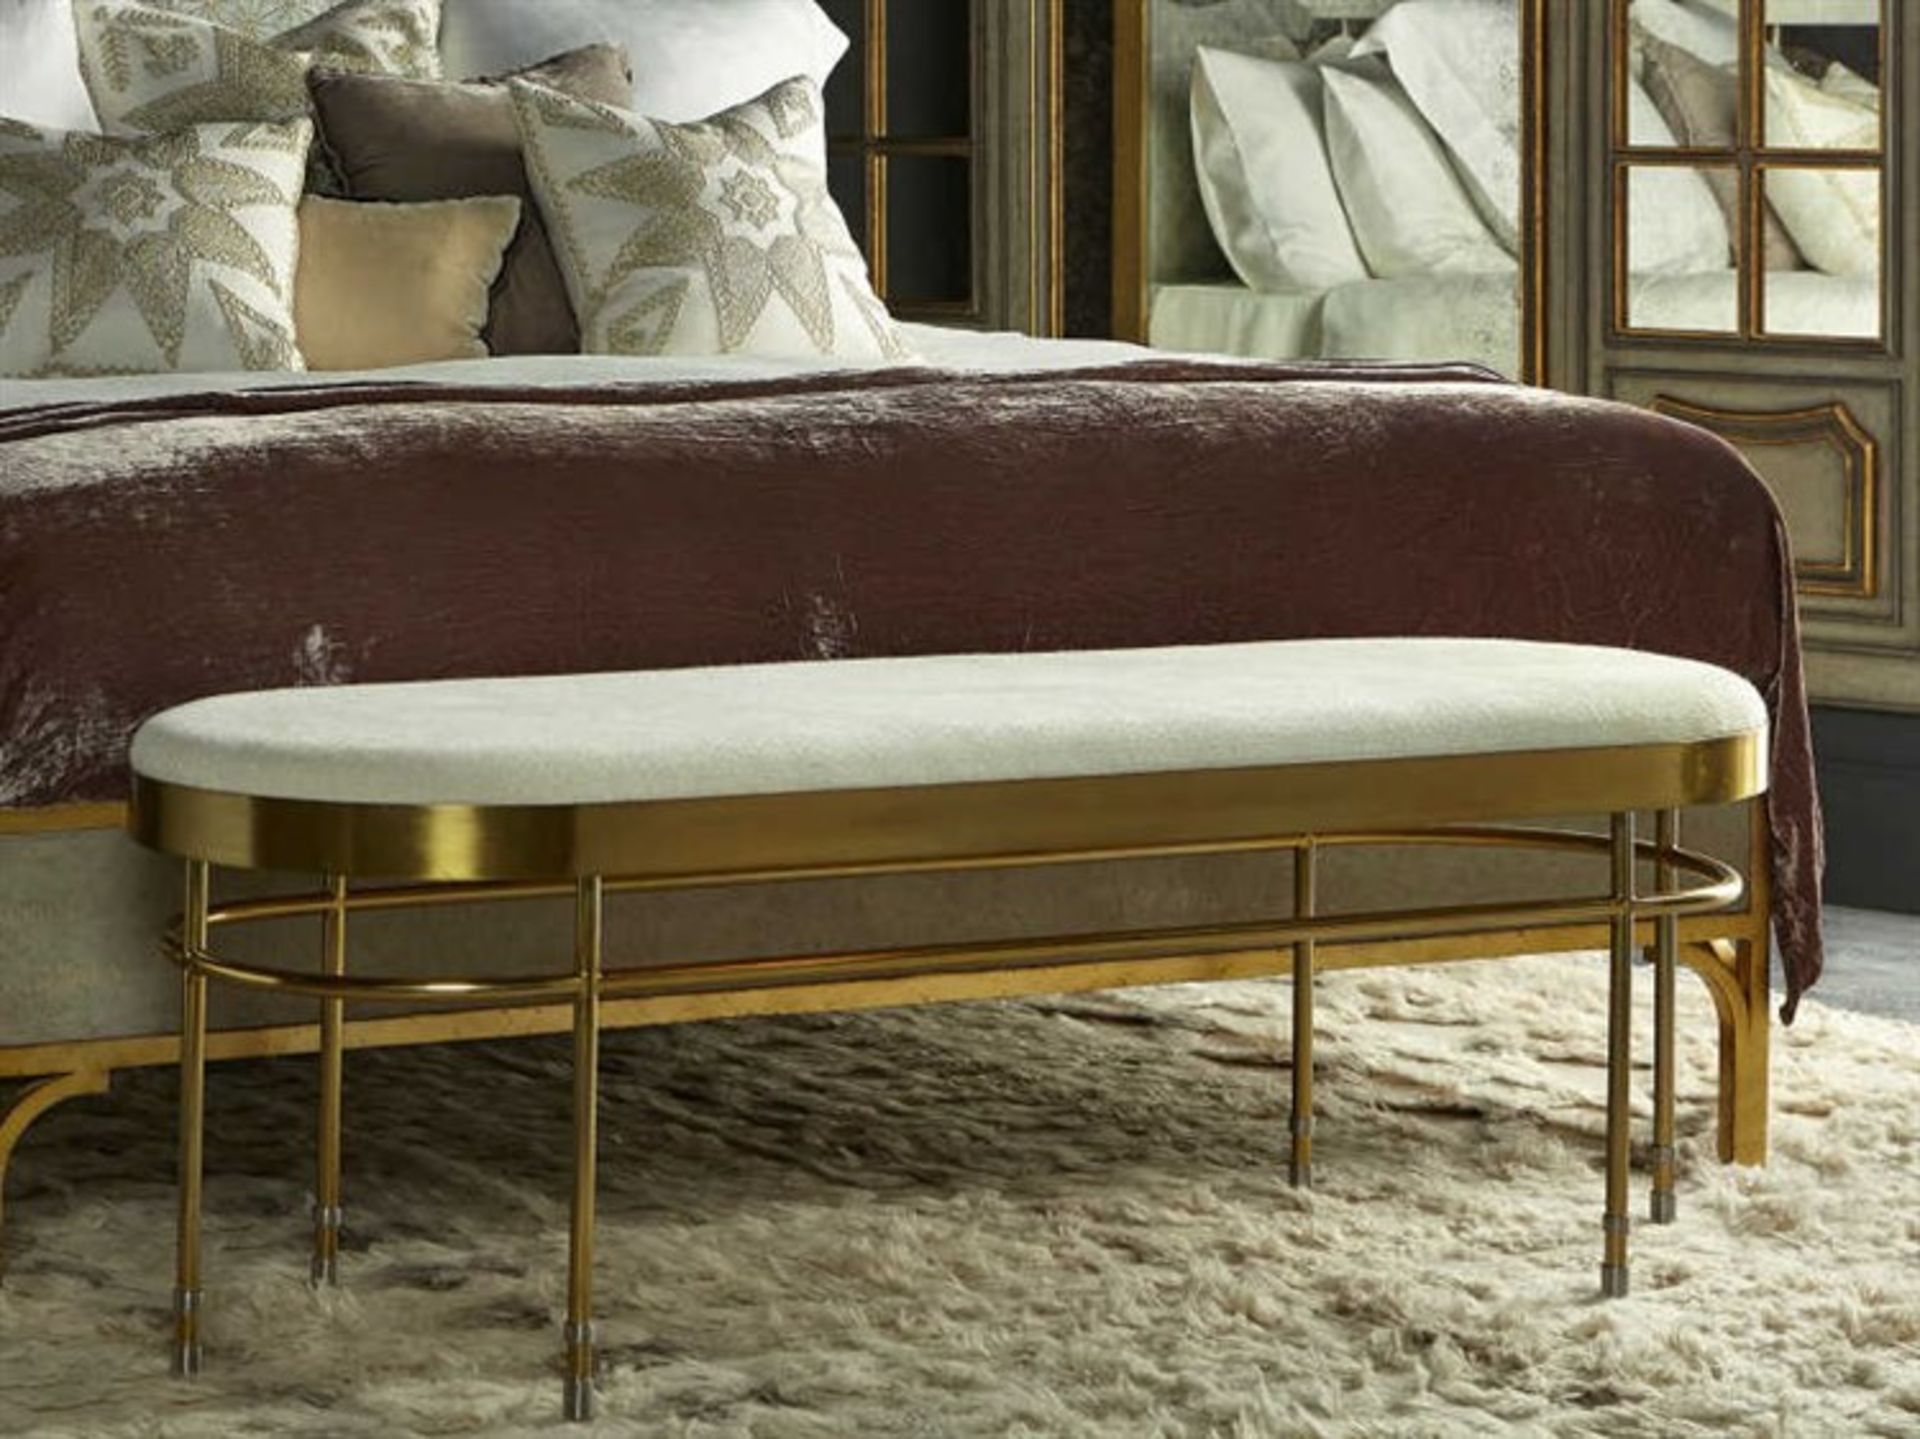 Lozenge Bench Cloud White Art Deco inspired oblong designer bench with satin brass finish.Inject